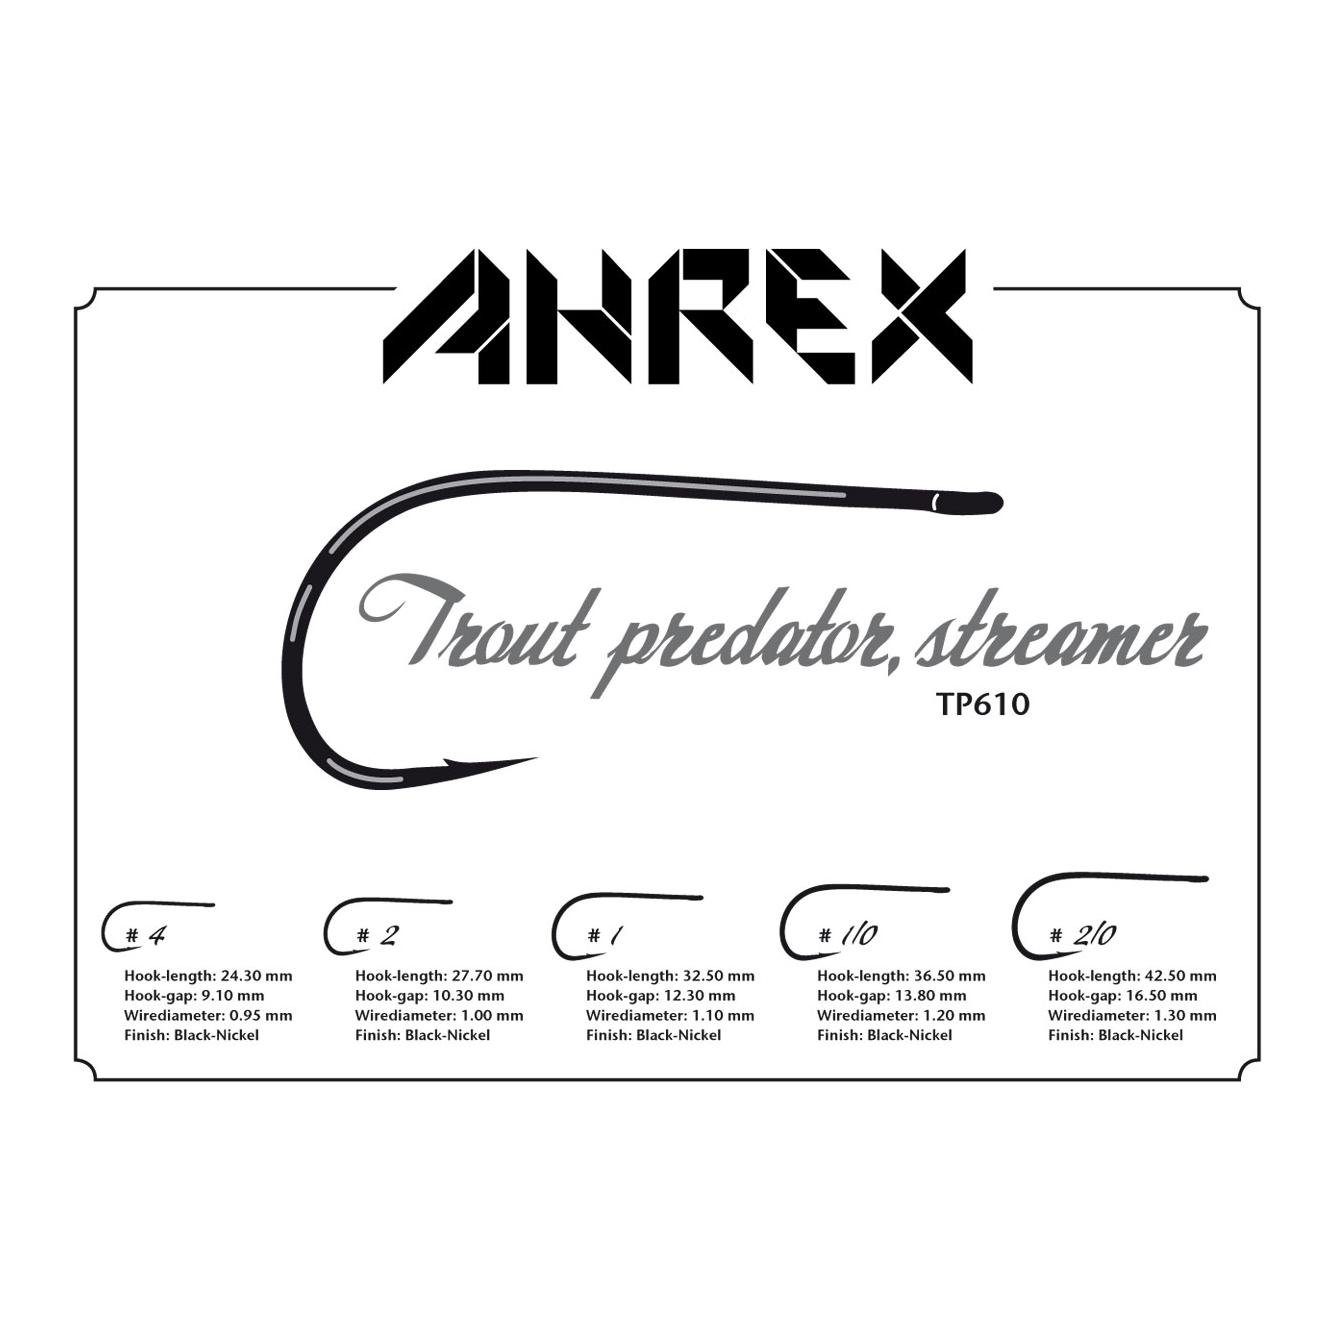 AHREX TP605 TROUT PREDATOR LIGHT 1